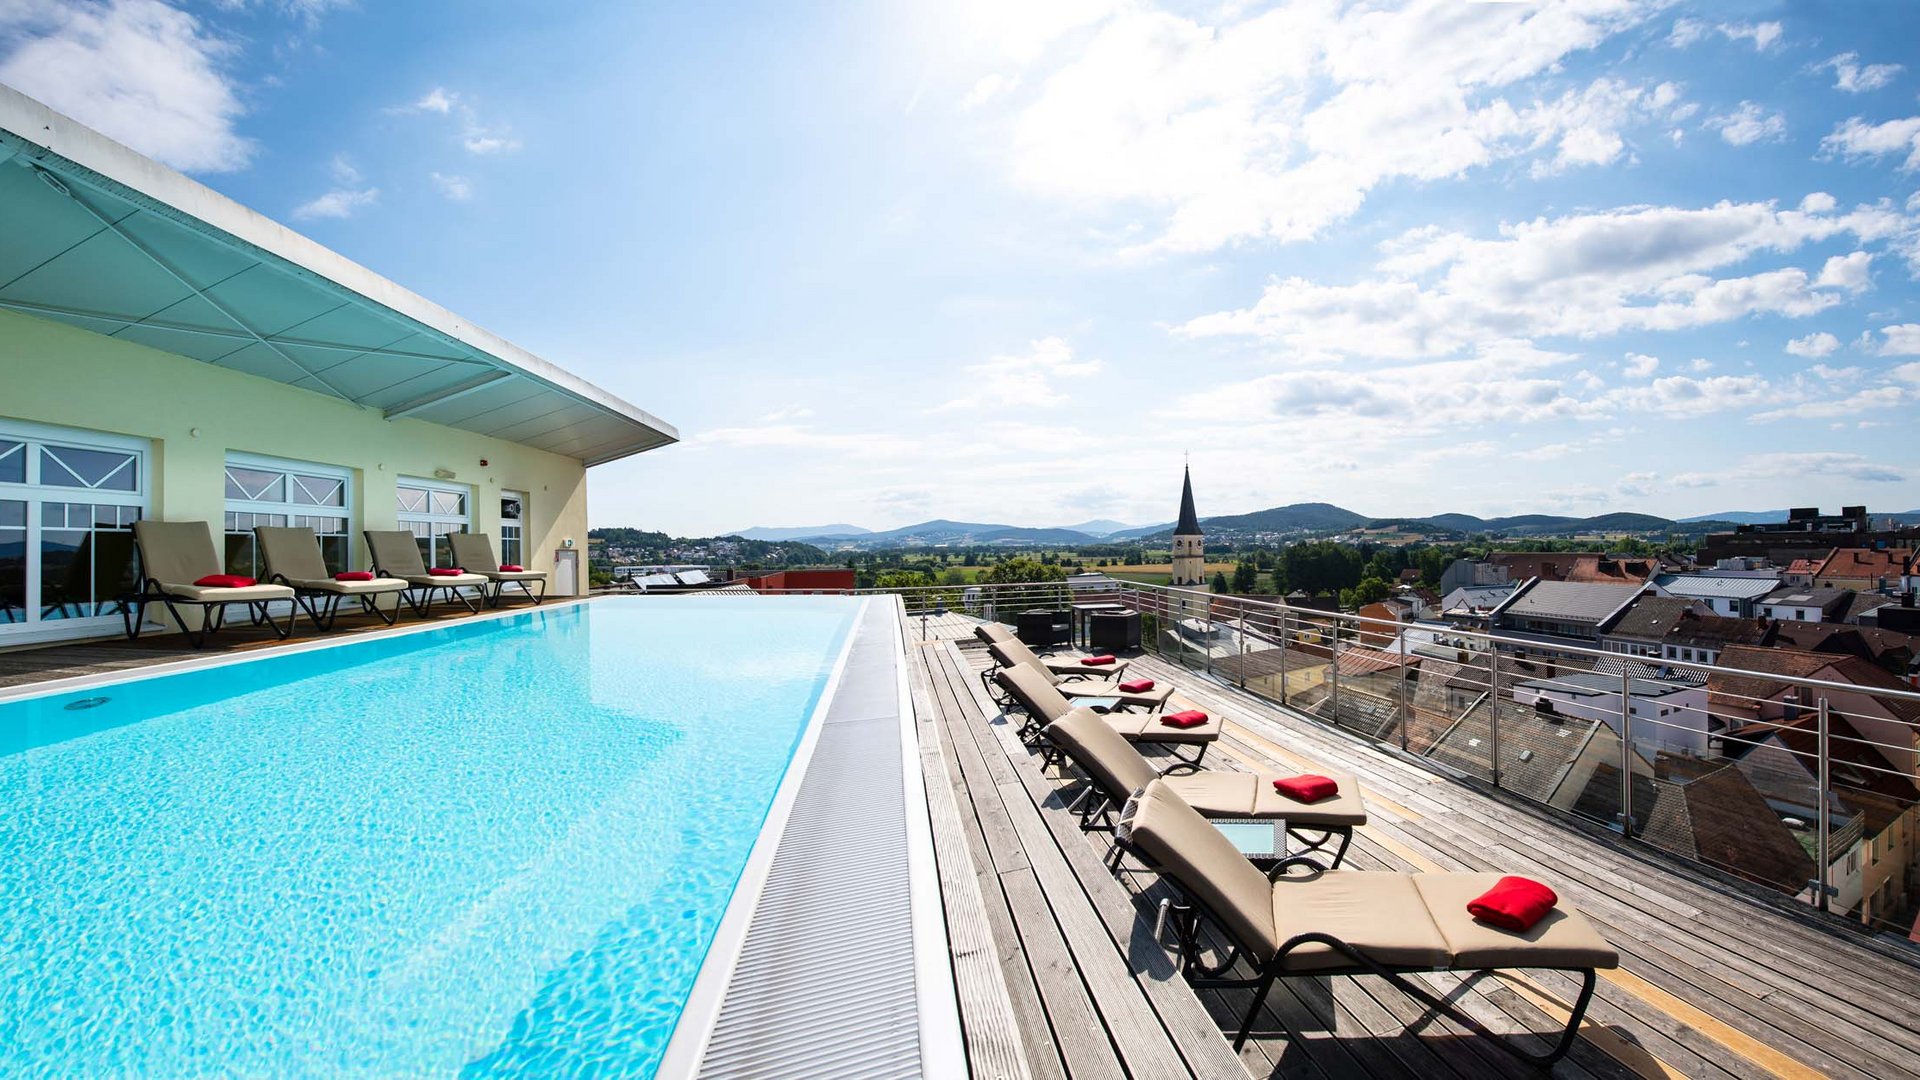 Das Hotel mit Pool in Bayern